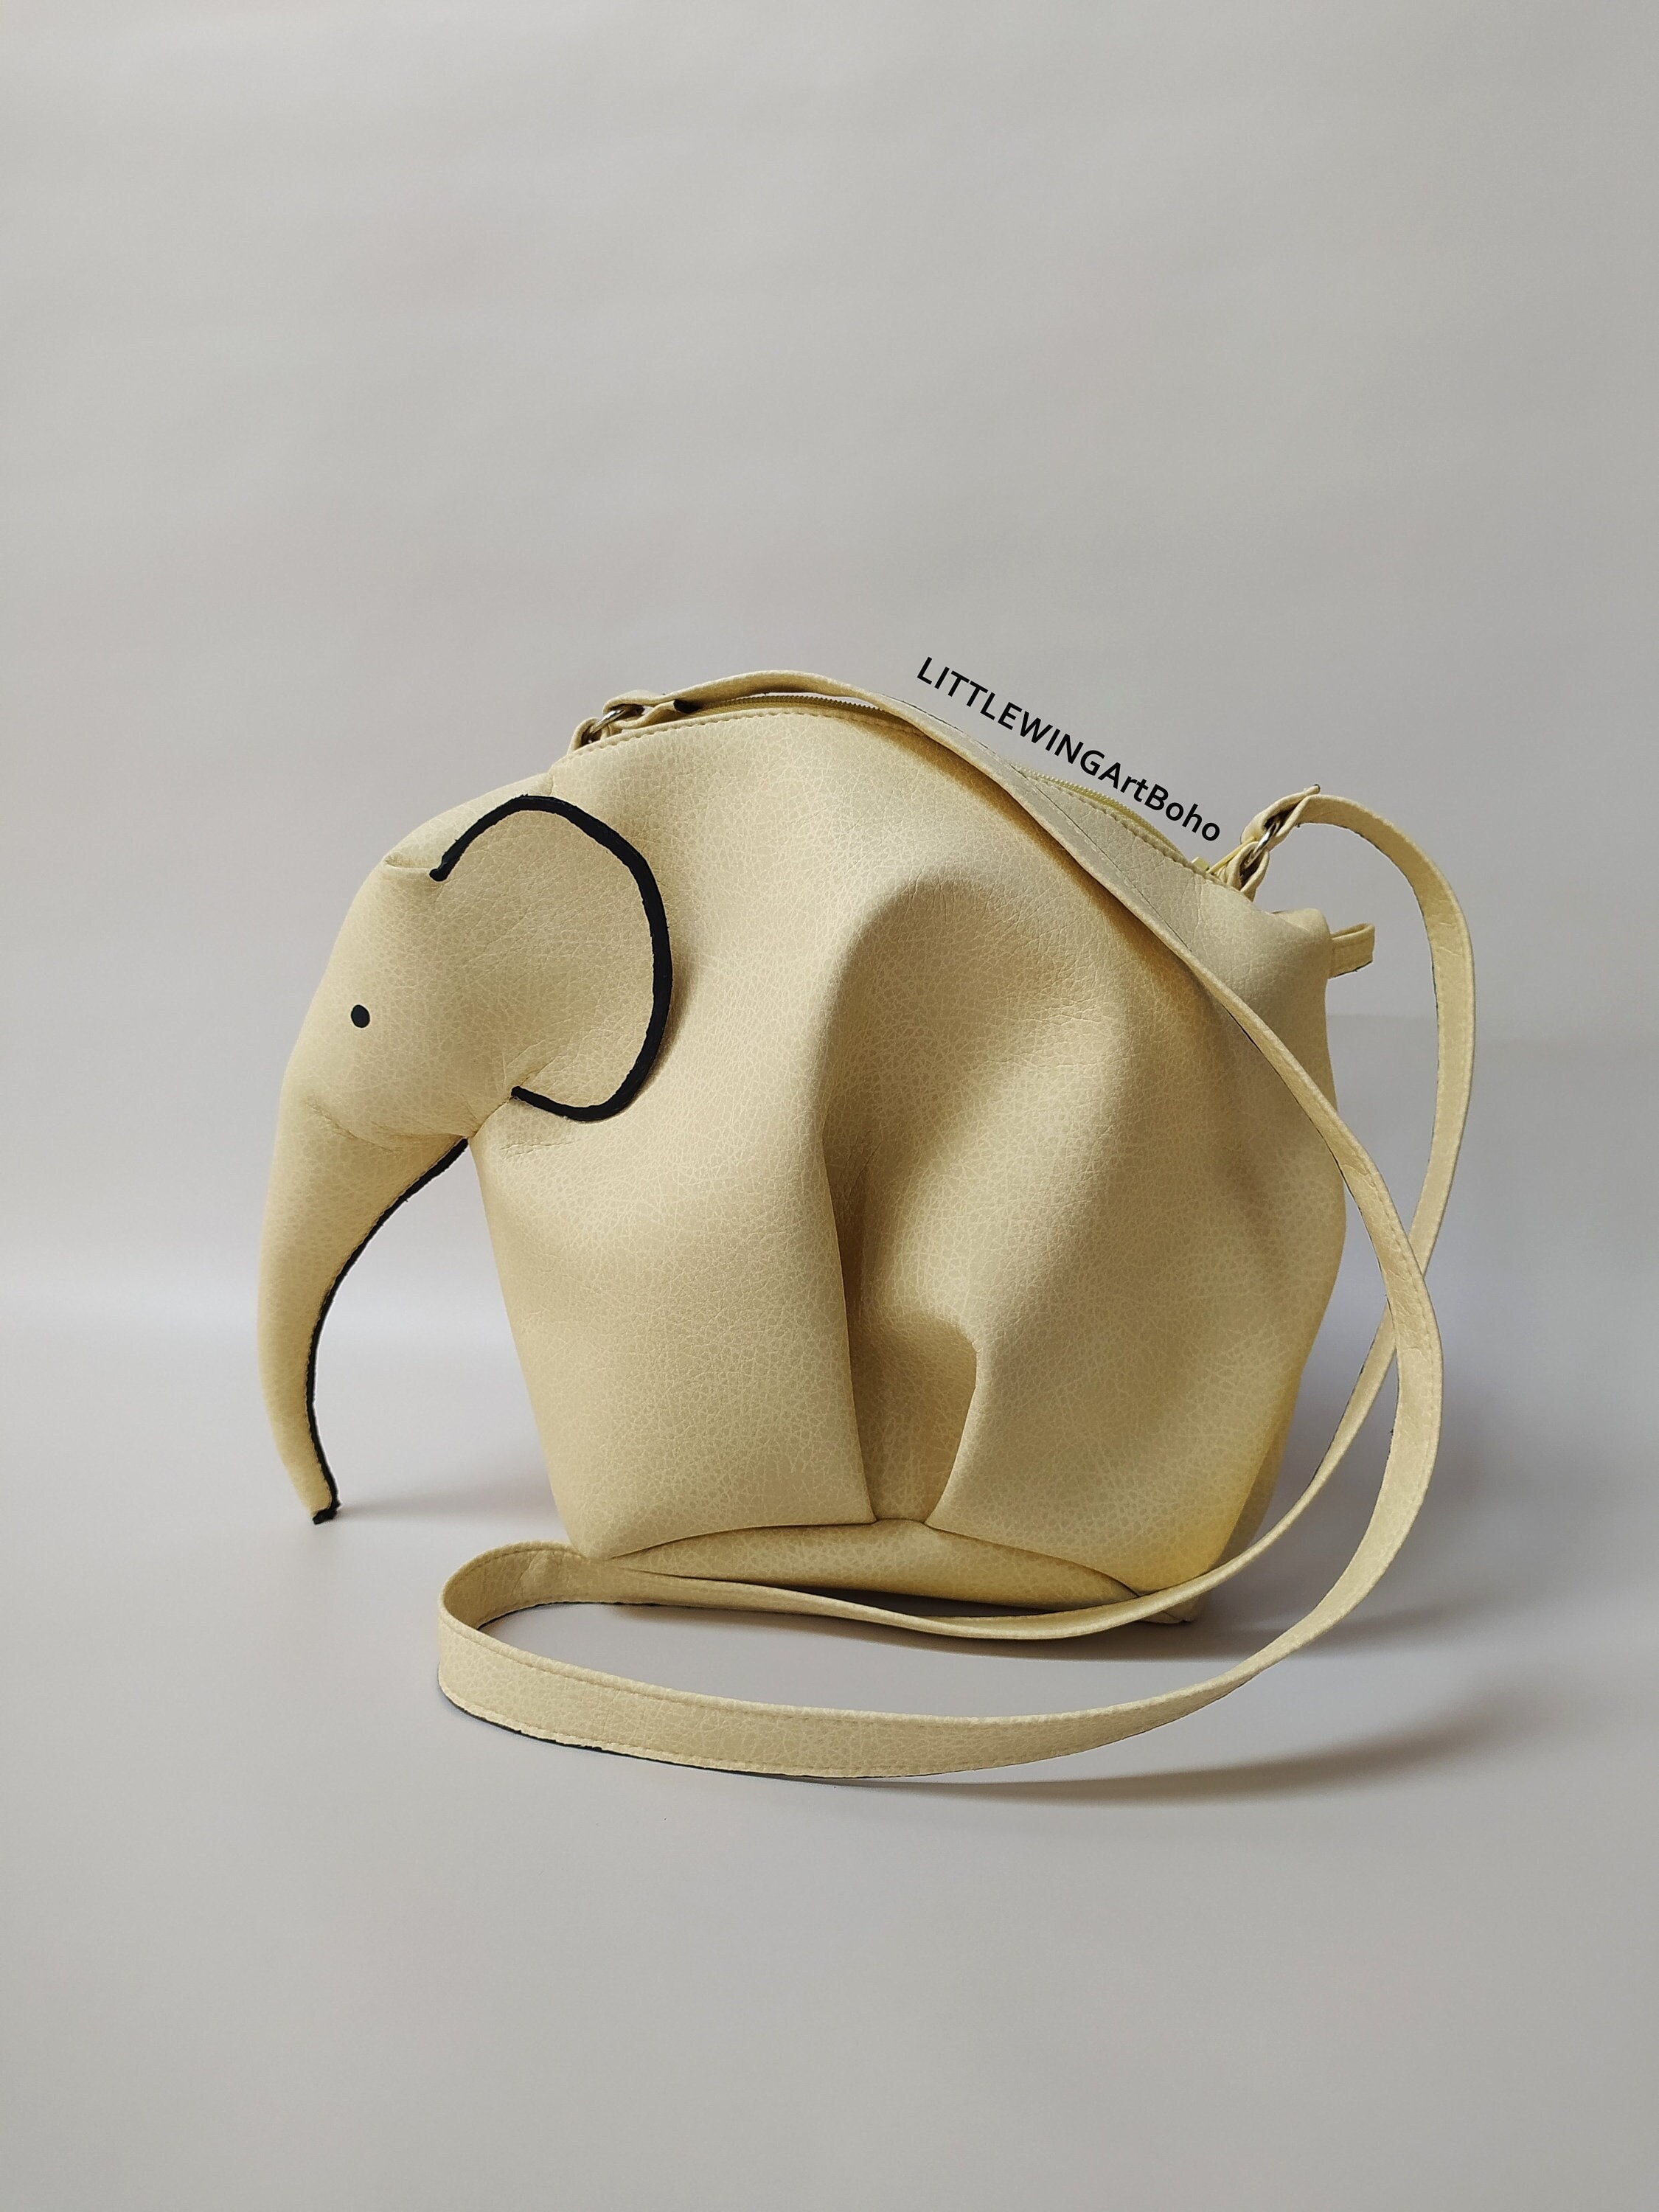 MILATA Animal Elephant Shape Crossbody Bag Purse Fashion Women PU Leather Chic Shoulder Bag Clutch for Girls